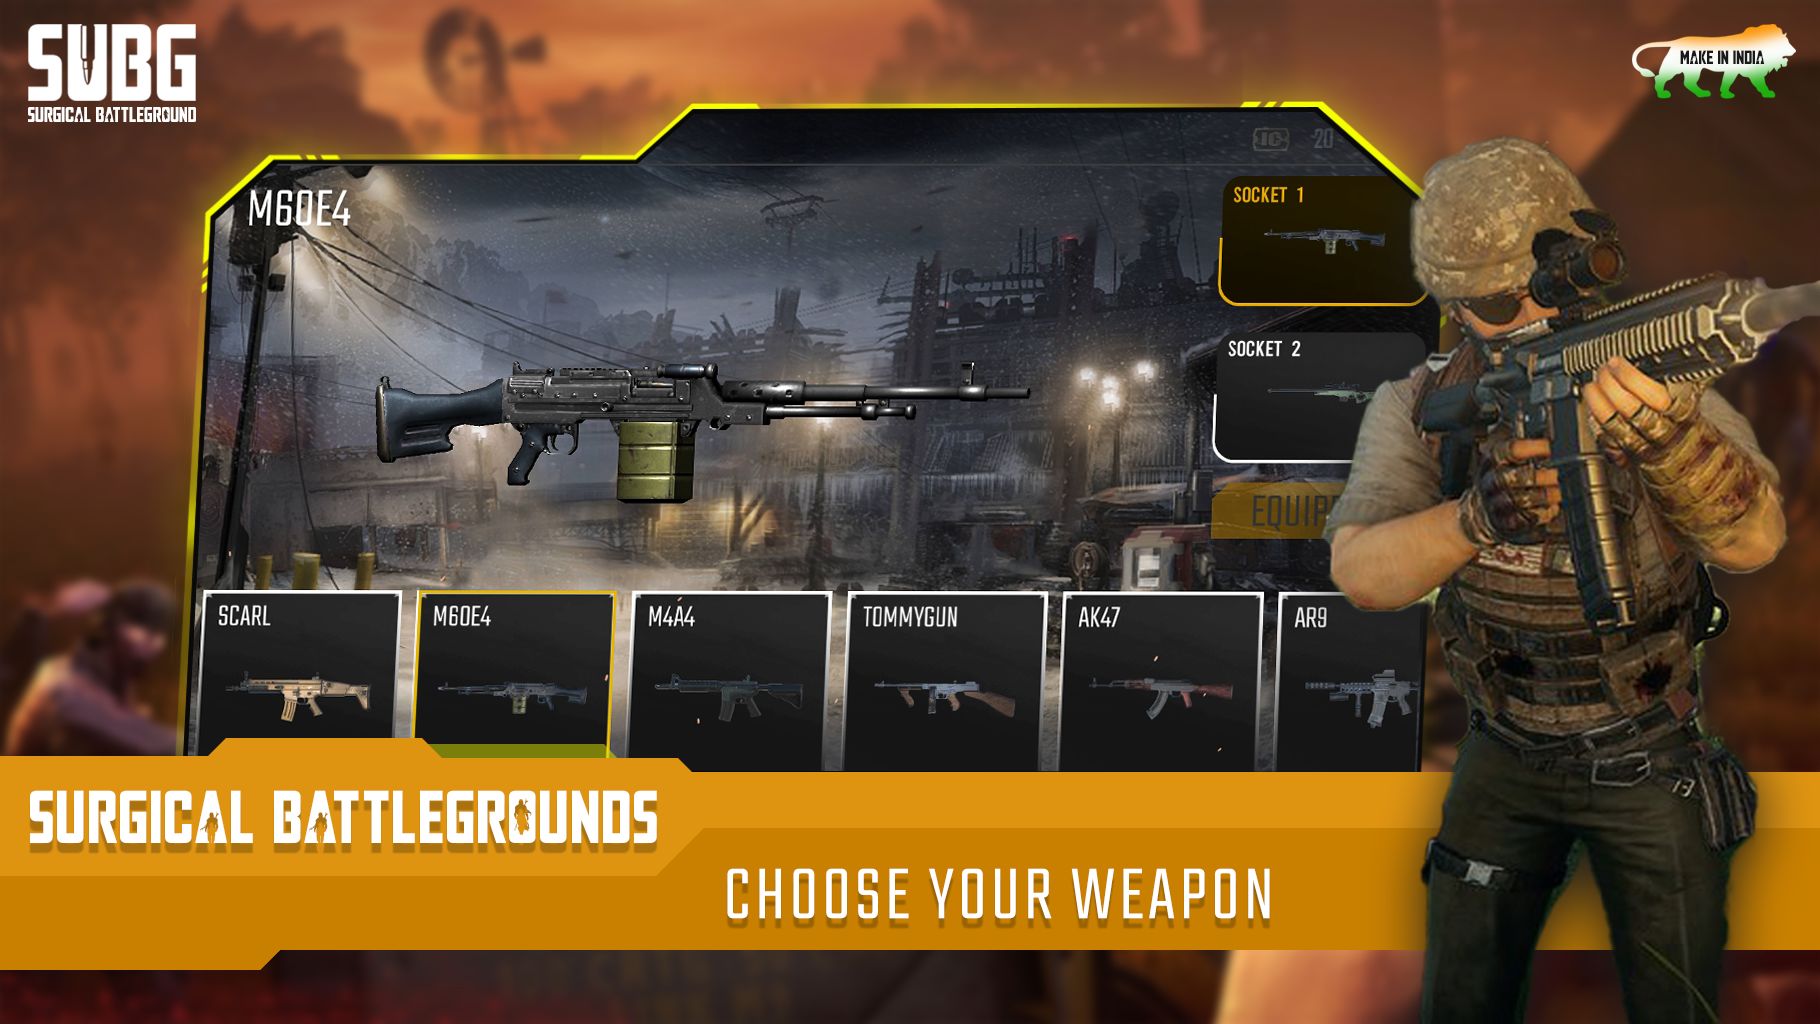 Screenshot of SUBG - Surgical Battlegrounds Multiplayer